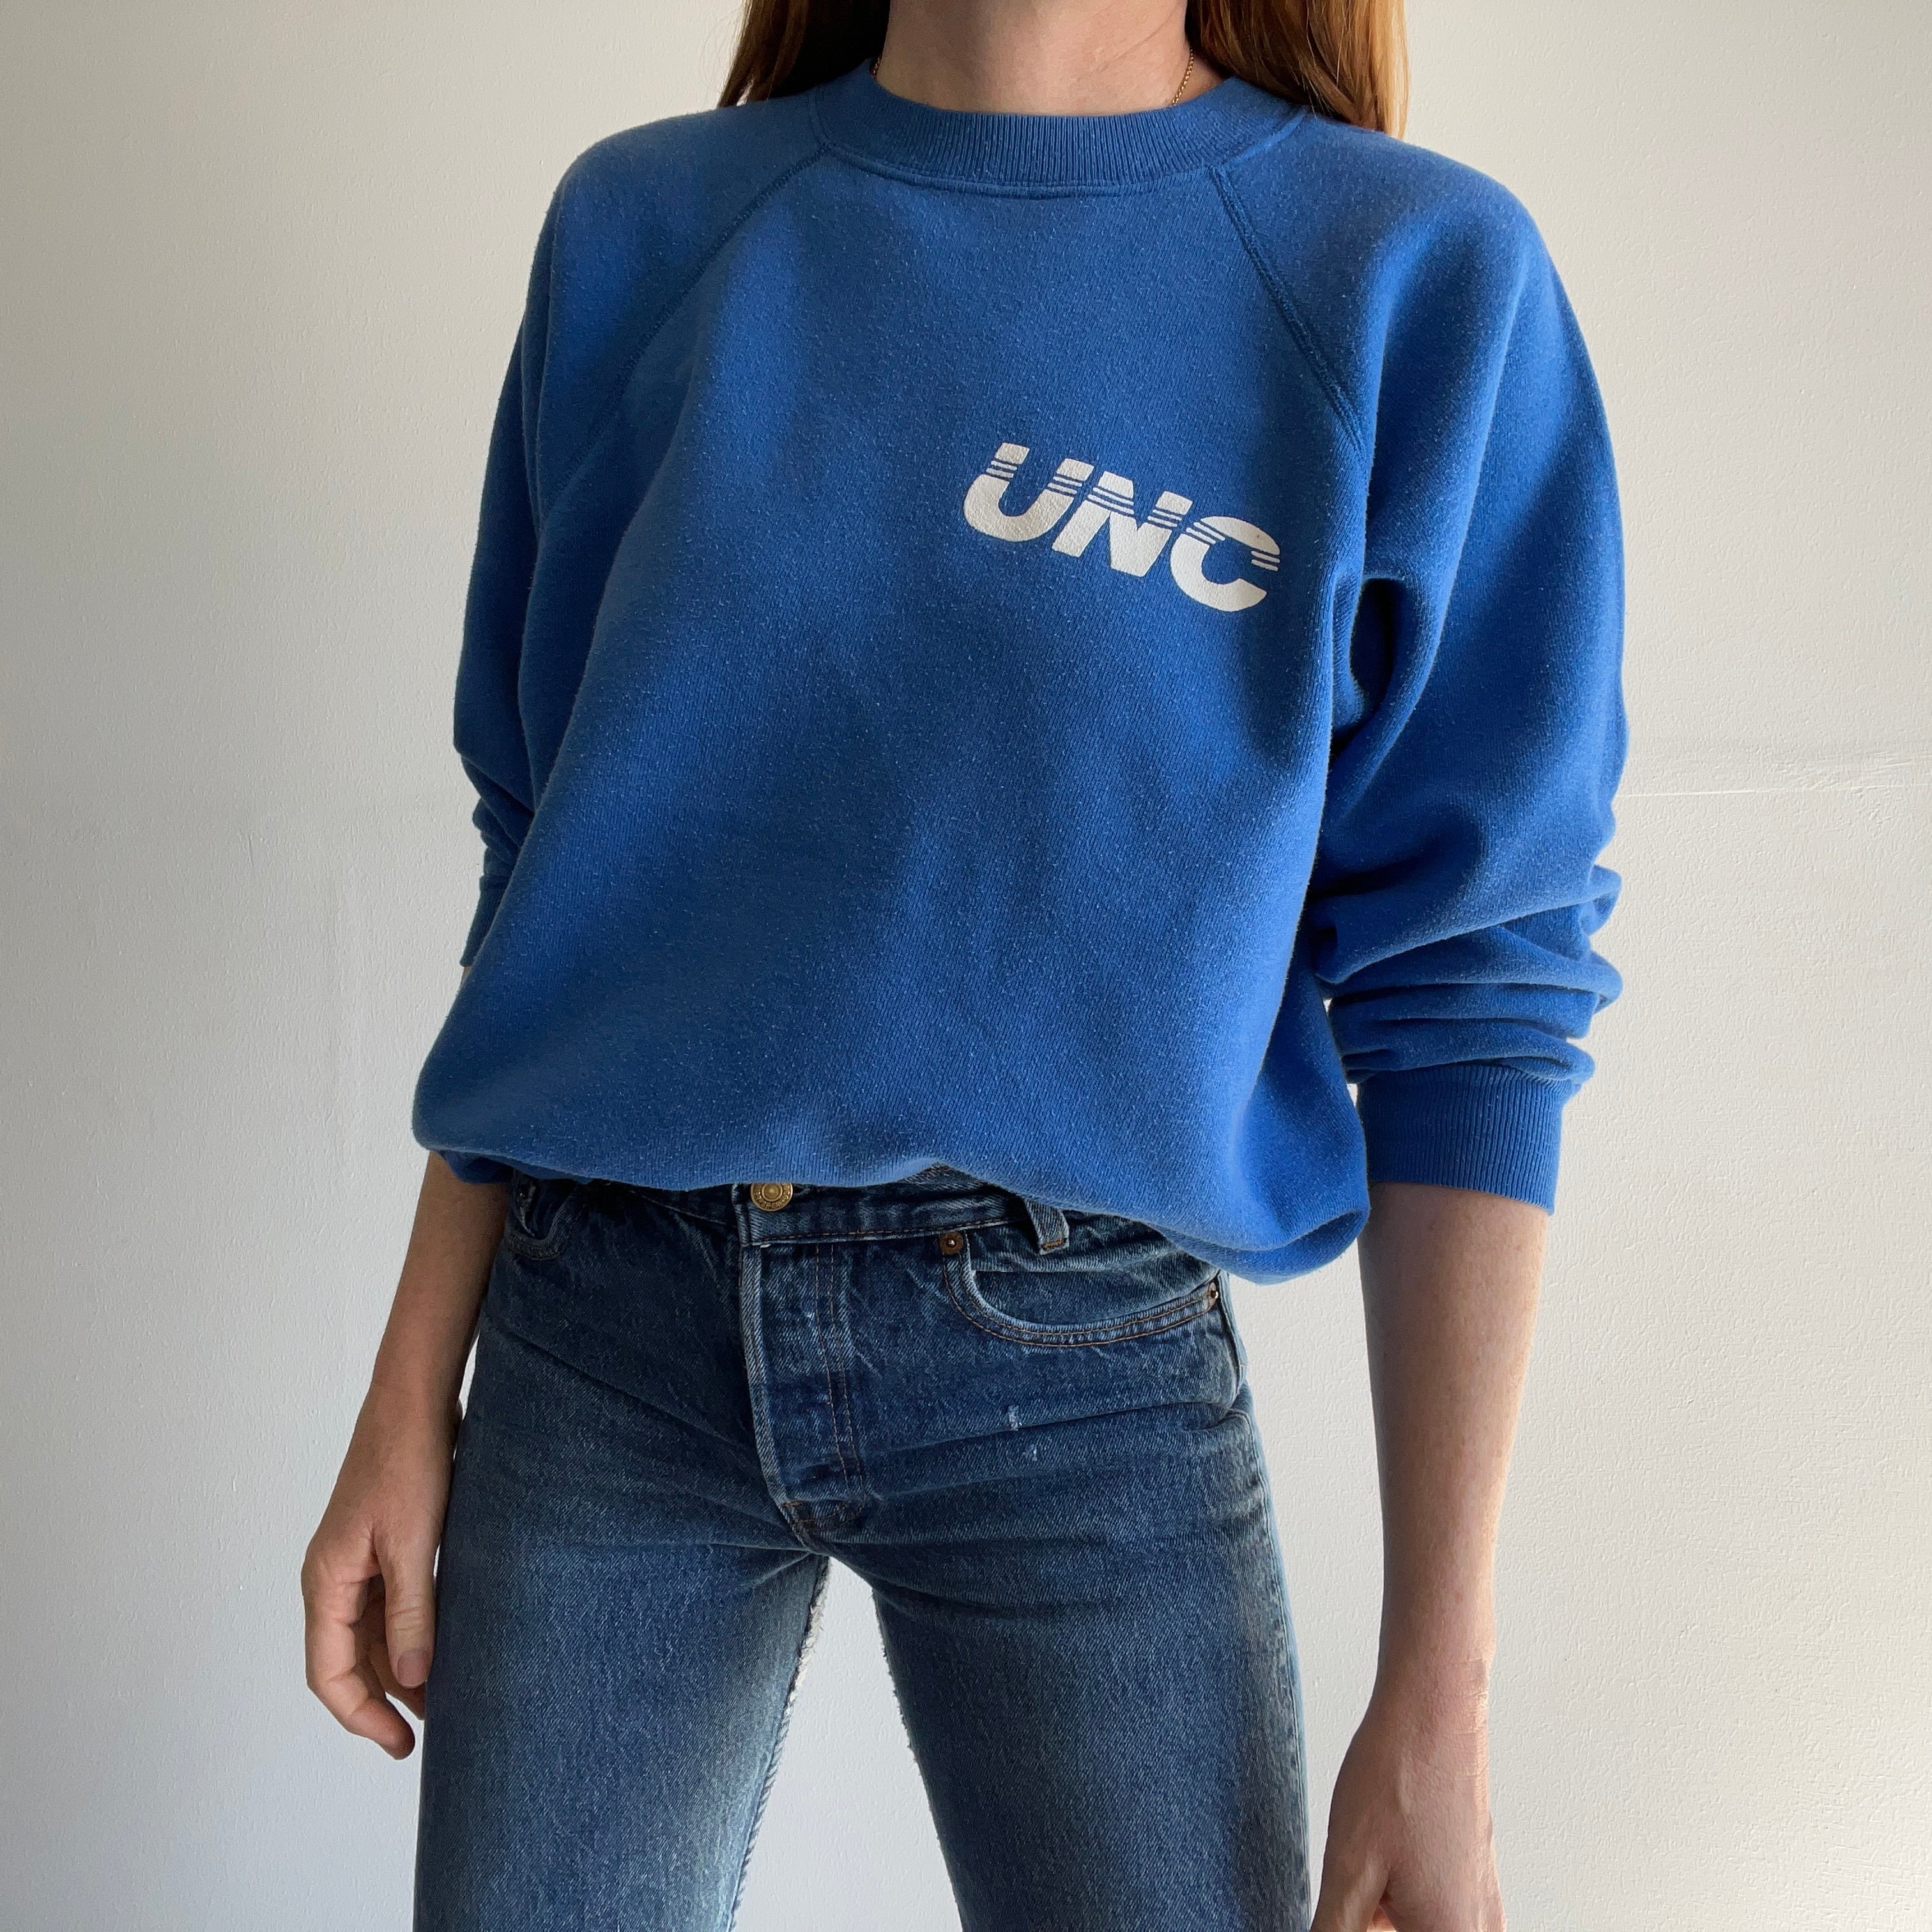 1980s University of North Carolina Sweatshirt